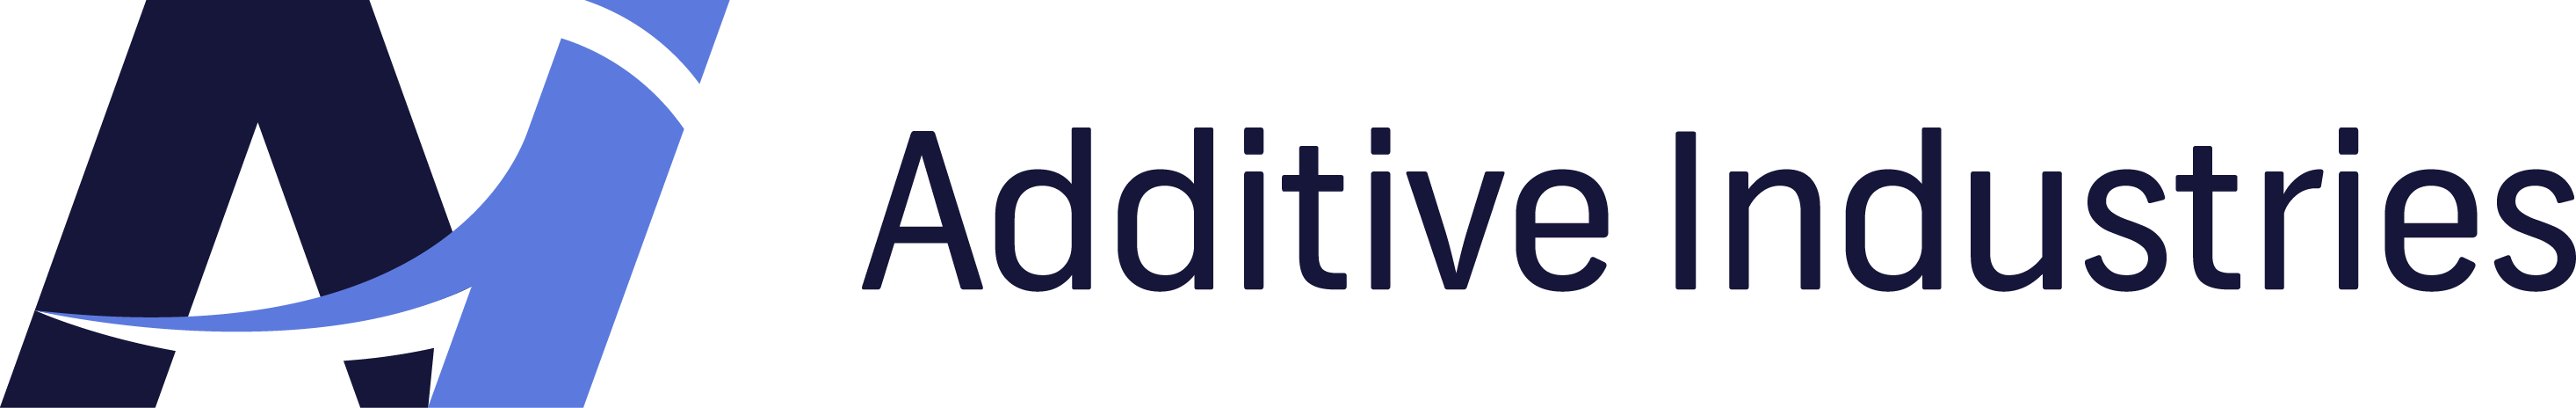 additive industries logo